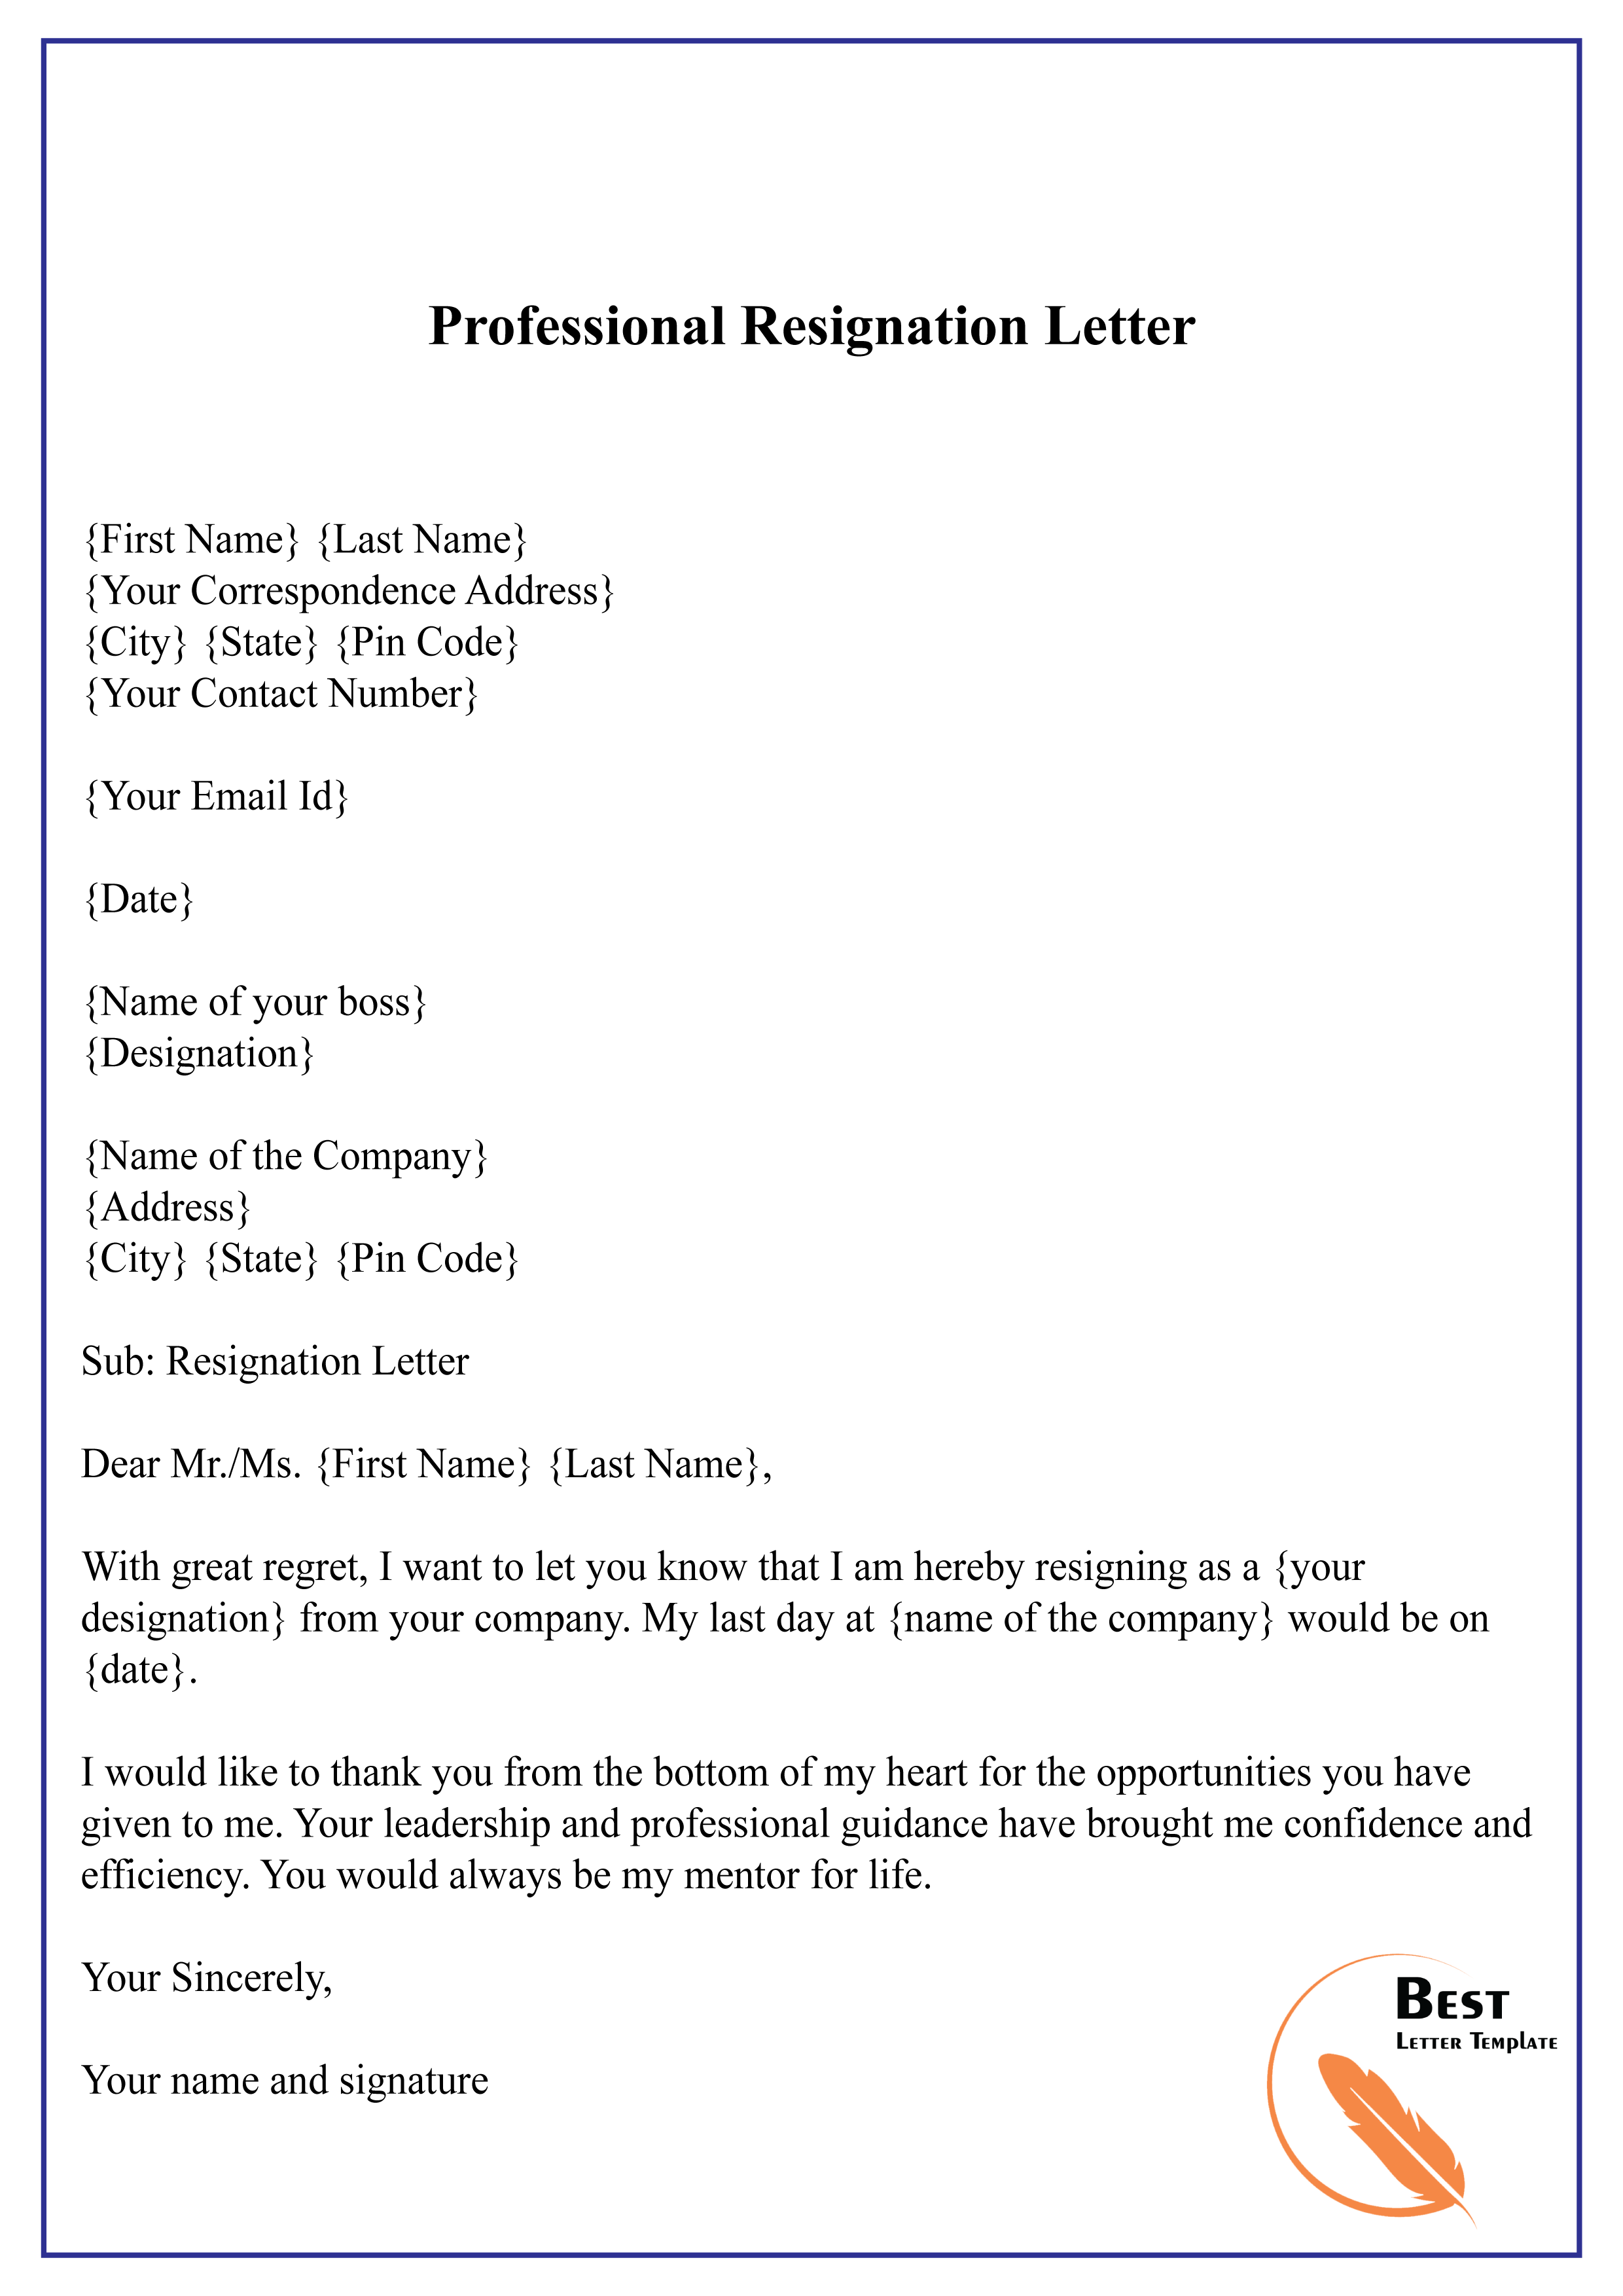 Professional Resignation Letter 01 